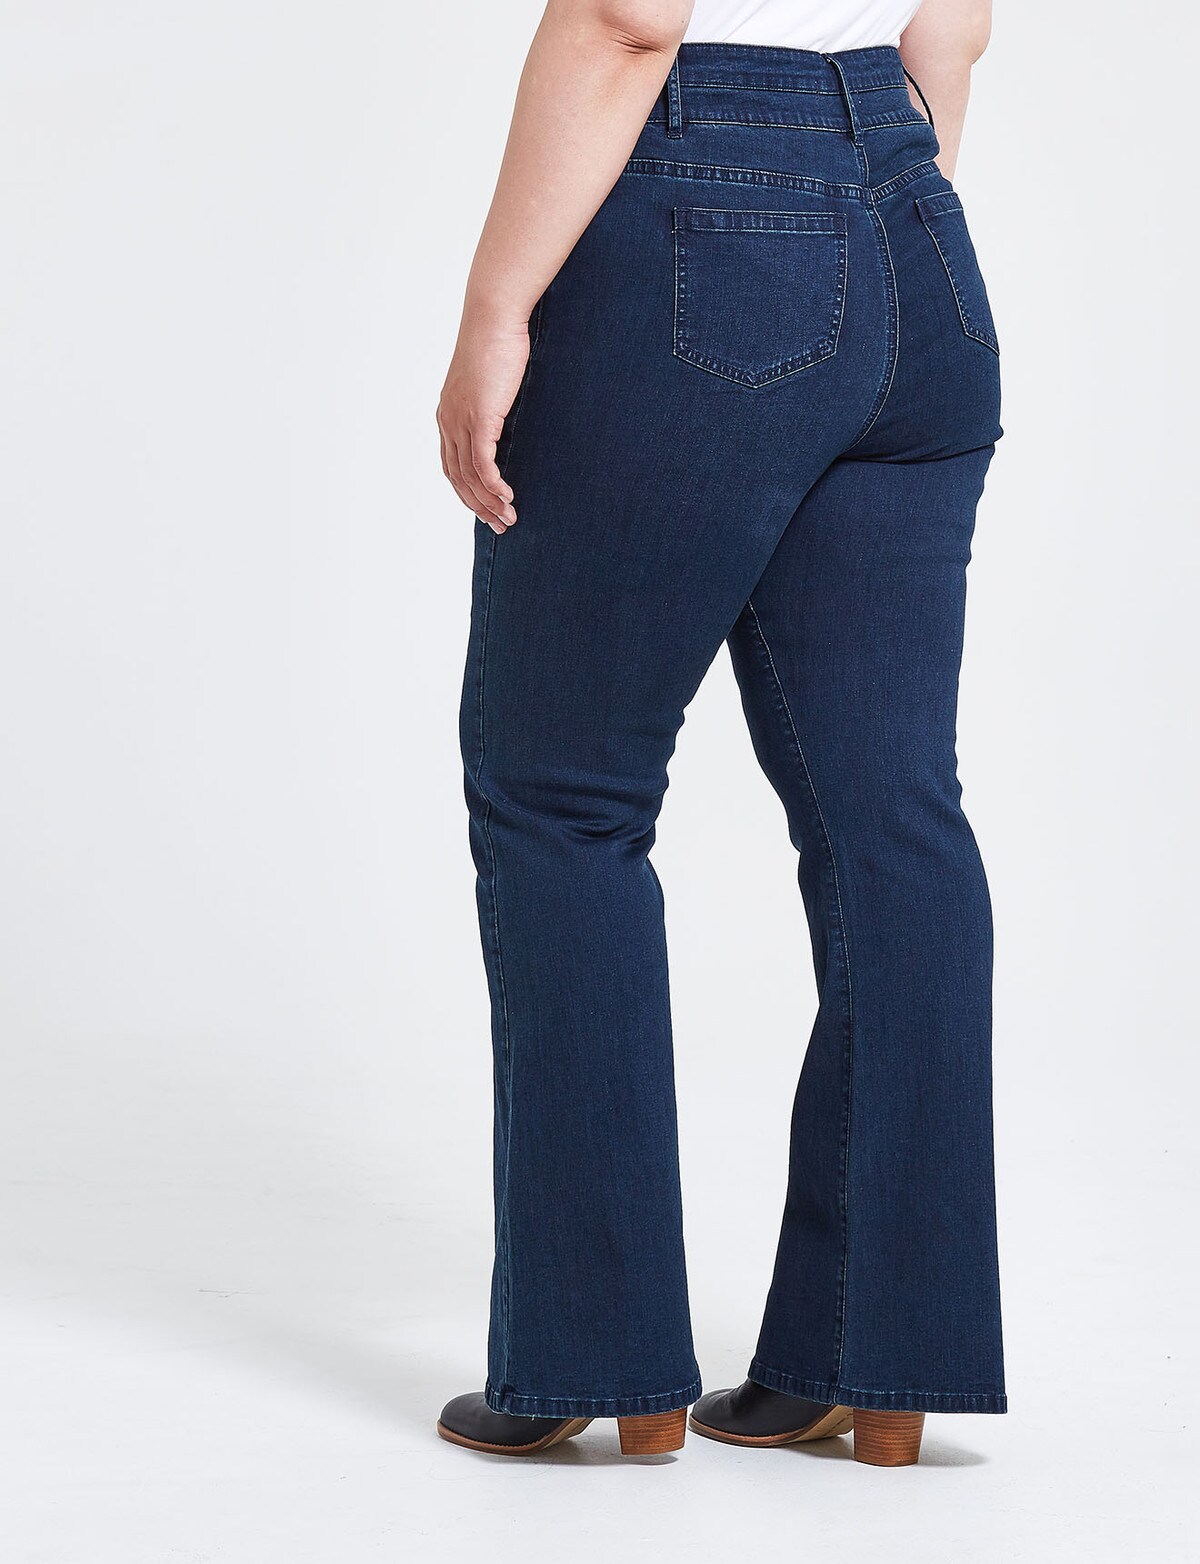 Denim Republic Curve Bootleg Jean, Dark Wash - Jeans, Pants & Shorts